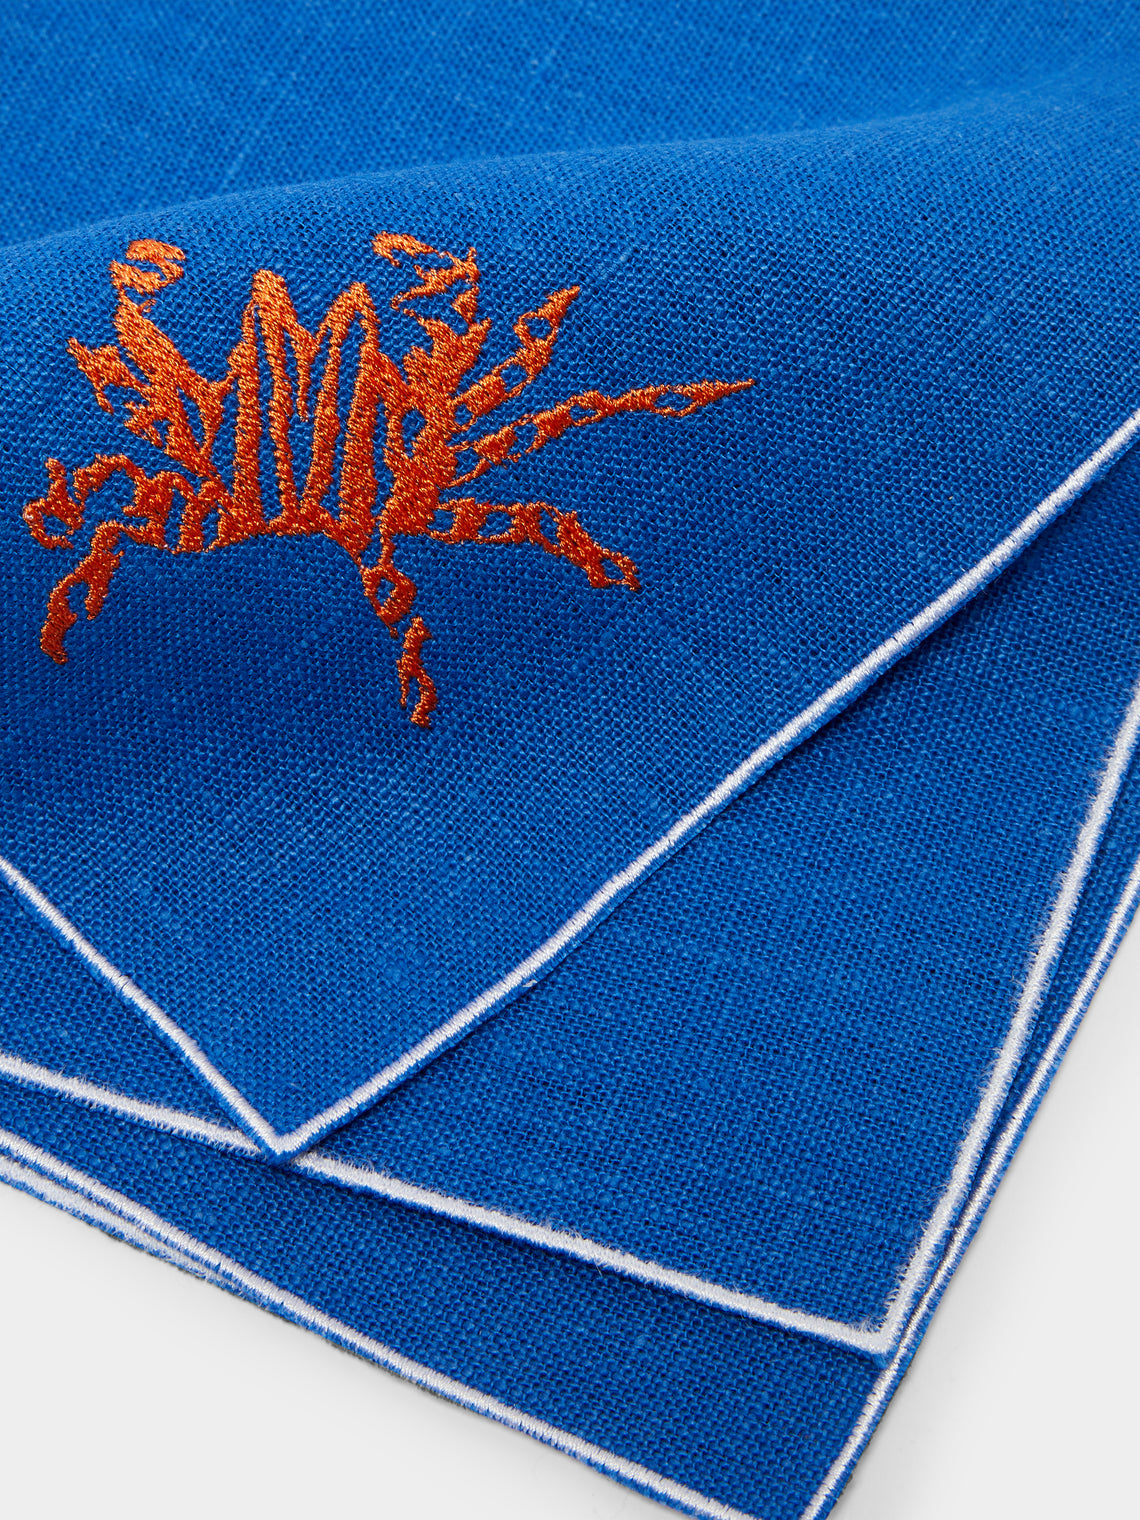 La Gallina Matta - Crabs Embroidered Linen Napkins (Set of 4) -  - ABASK